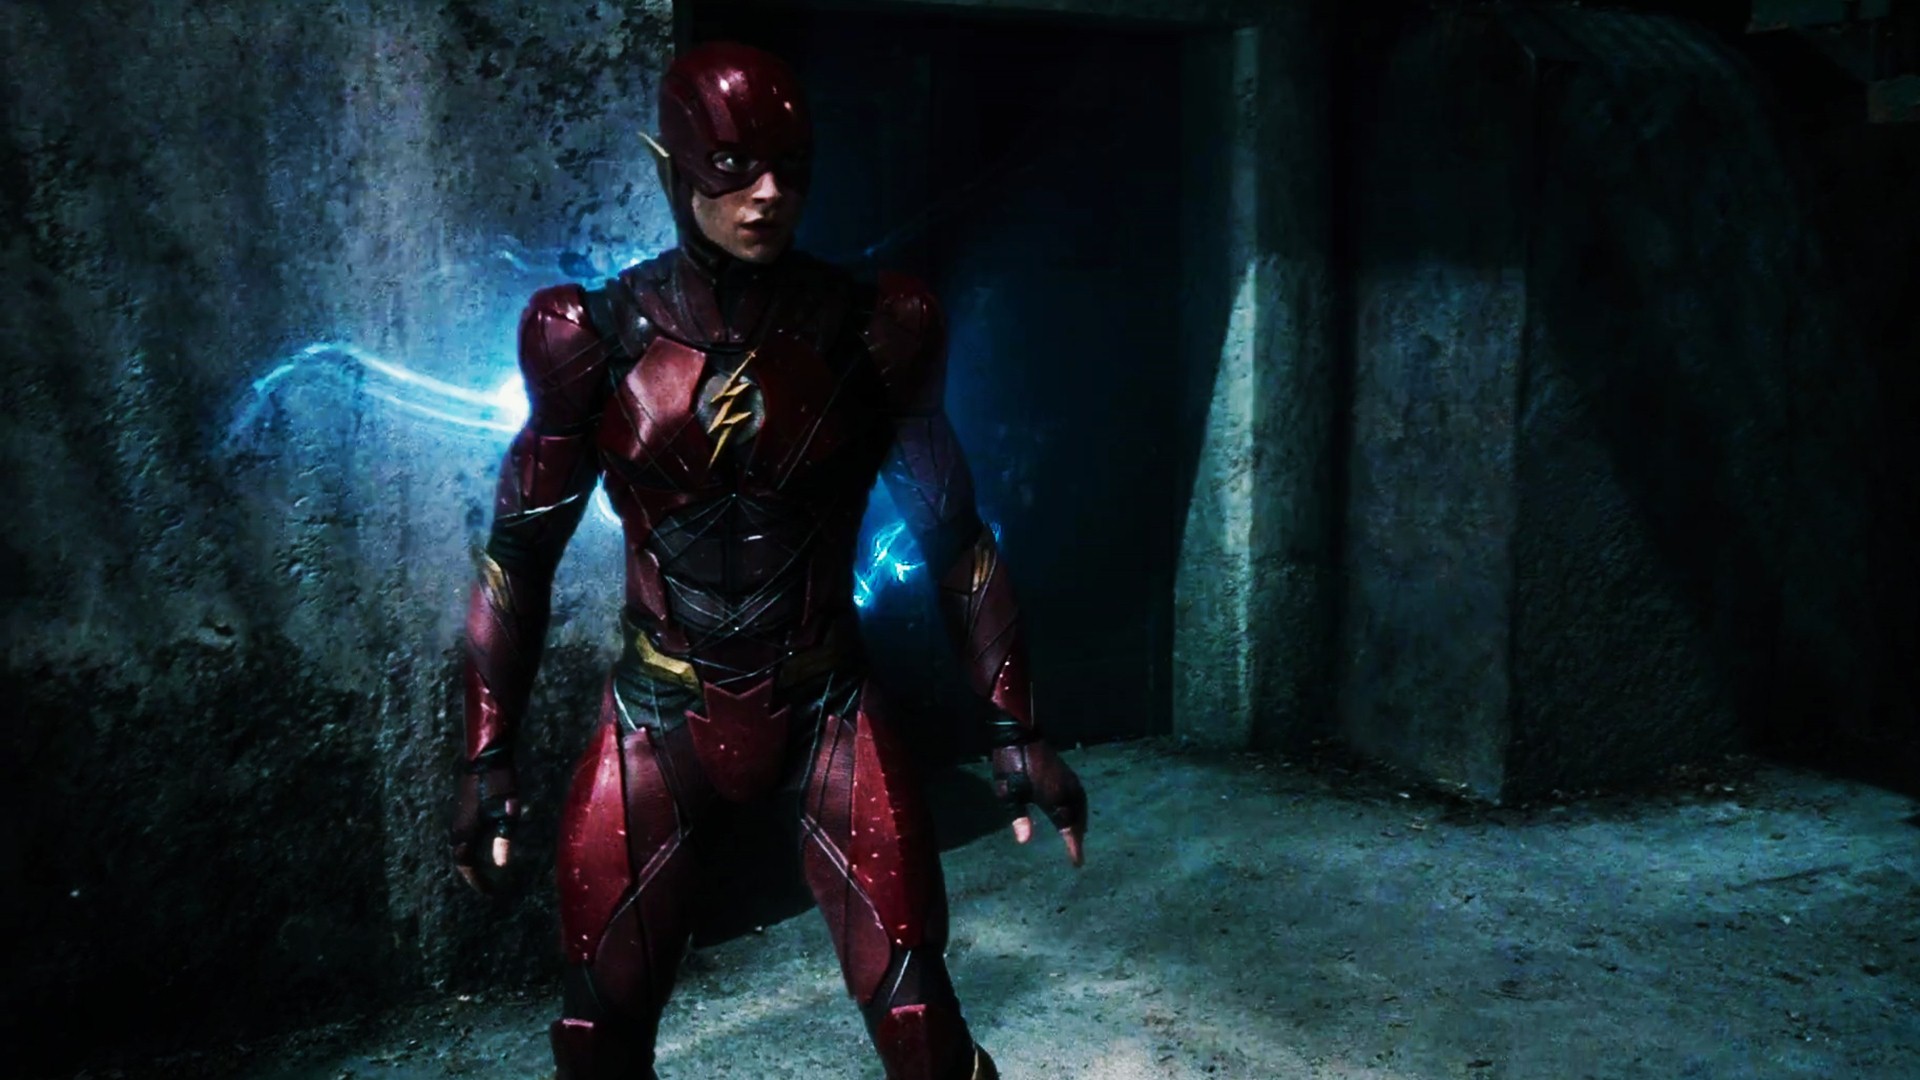 Barry Allen Justice League Wallpaper - Flash Justice League Suit - HD Wallpaper 